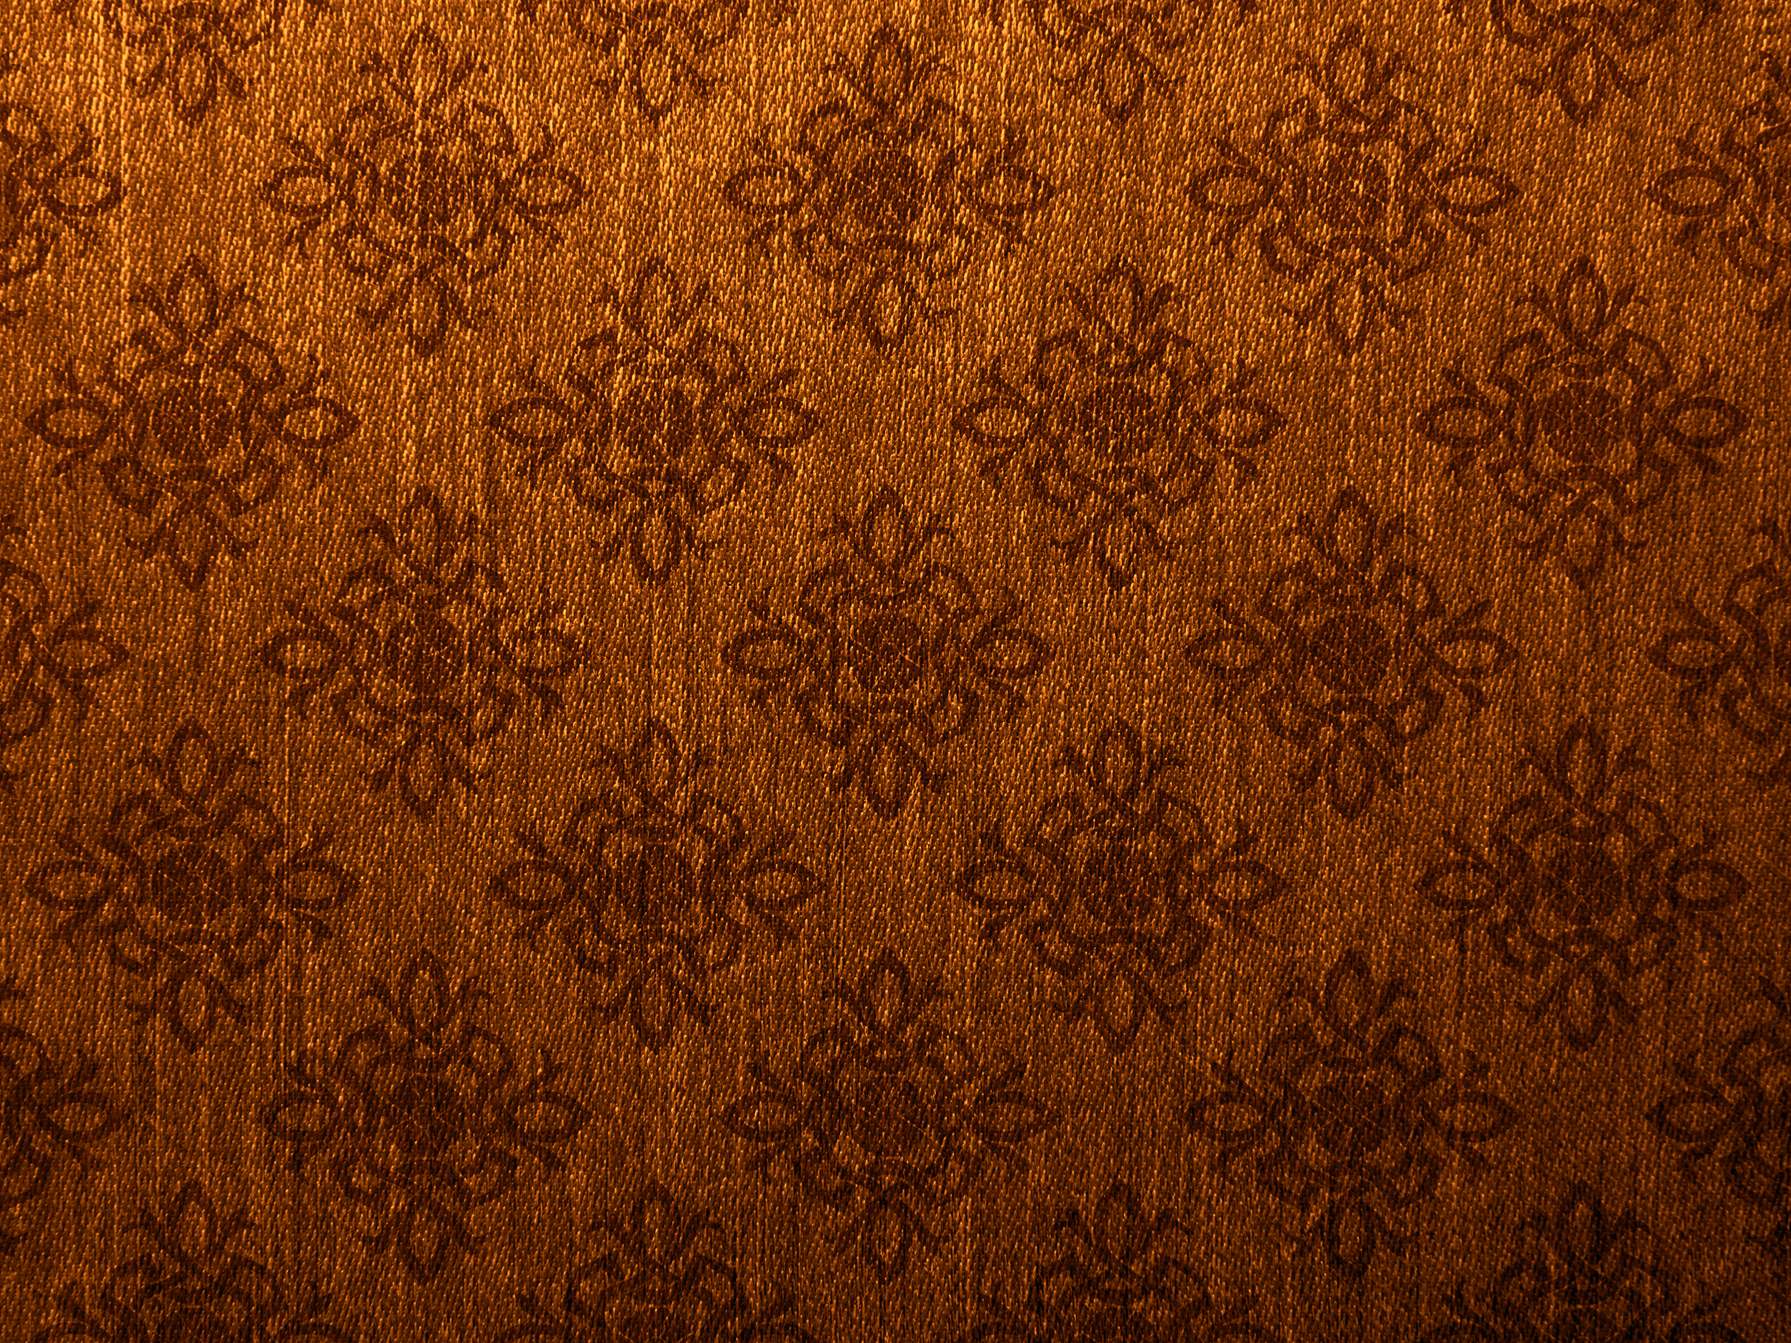 Damask Vintage Brown Gold S Texture Background PhotoHDx